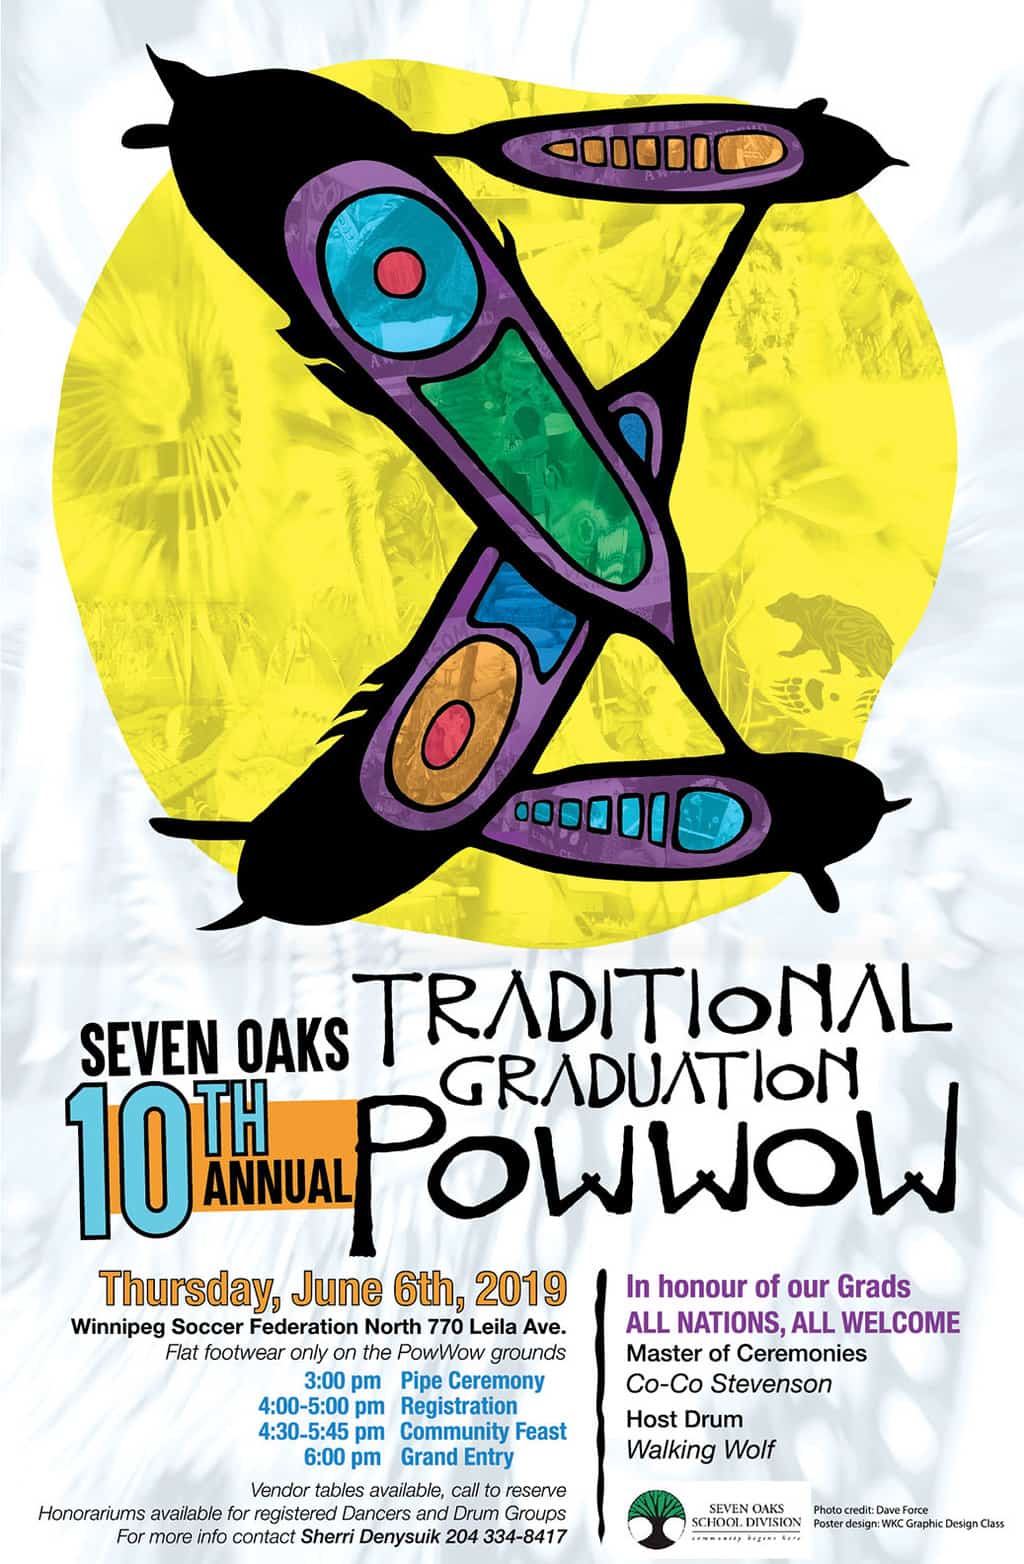 Seven Oaks 10th Annual Traditional Graduation Pow Wow (2019)